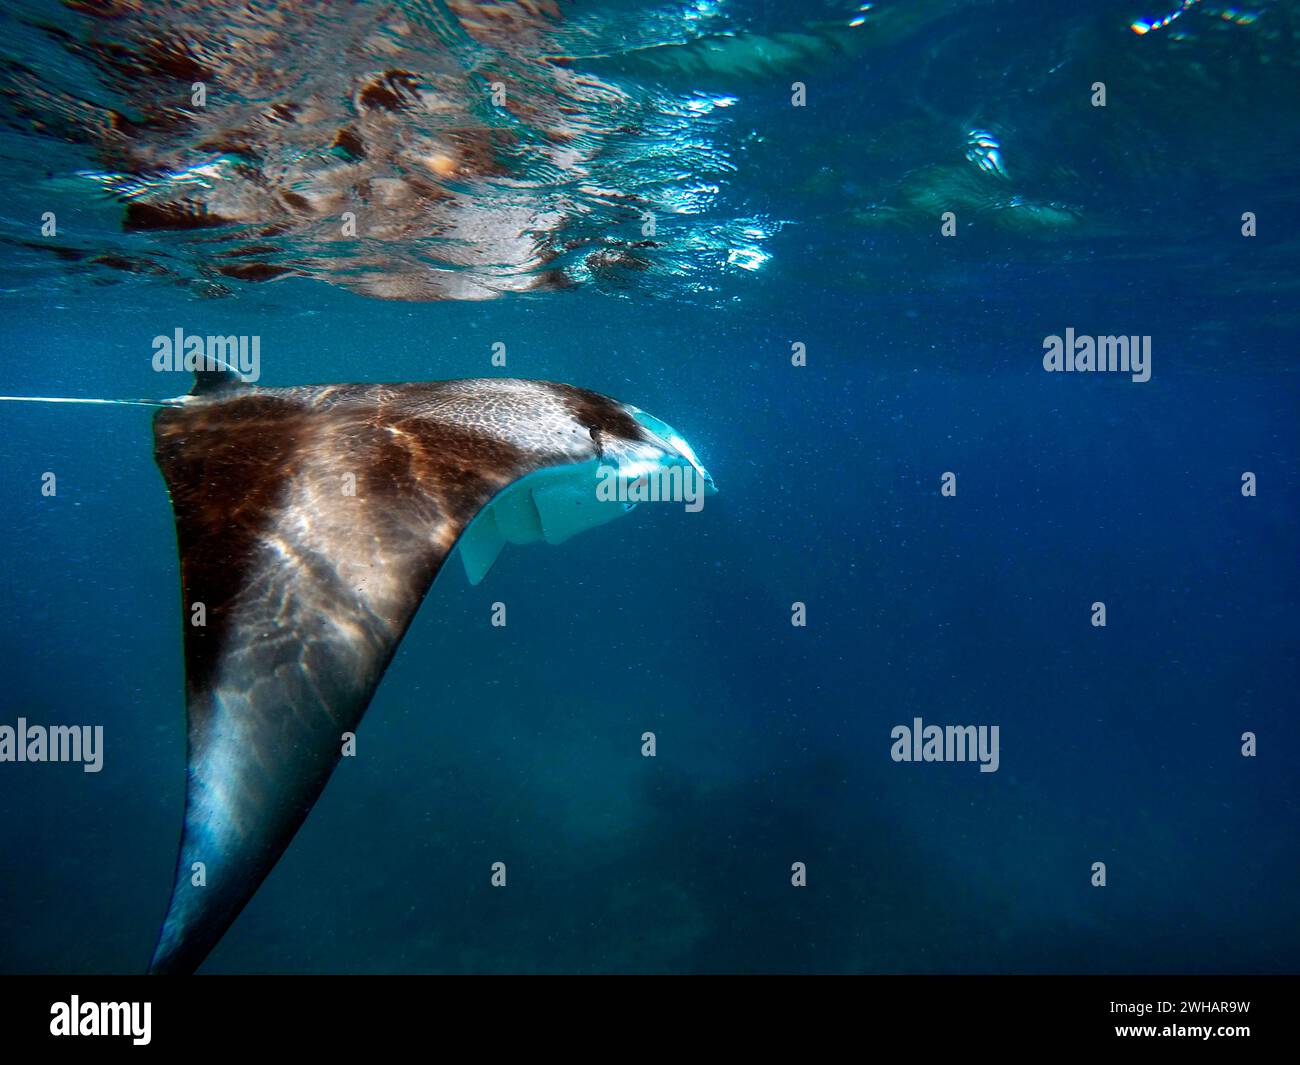 Swimming with reef manta rays gian manta ray birostris in Ari Atoll, Maldives. Stock Photo